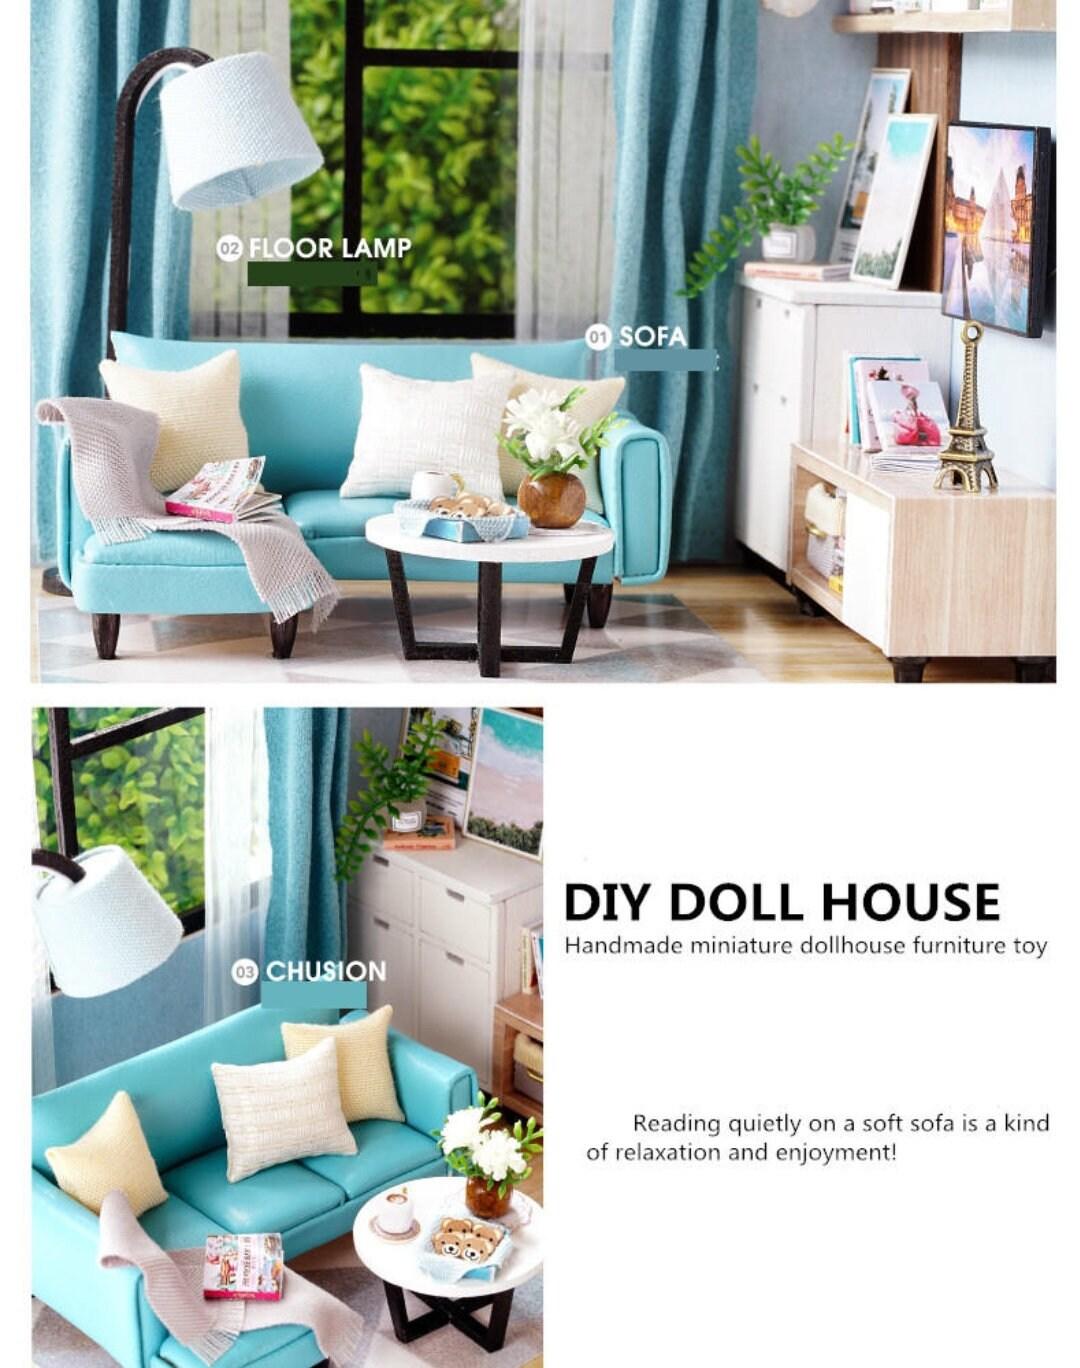 DIY Dollhouse Kit Living Room Miniature House with Furniture Adult Craft DIY Kits children gift - Rajbharti Crafts